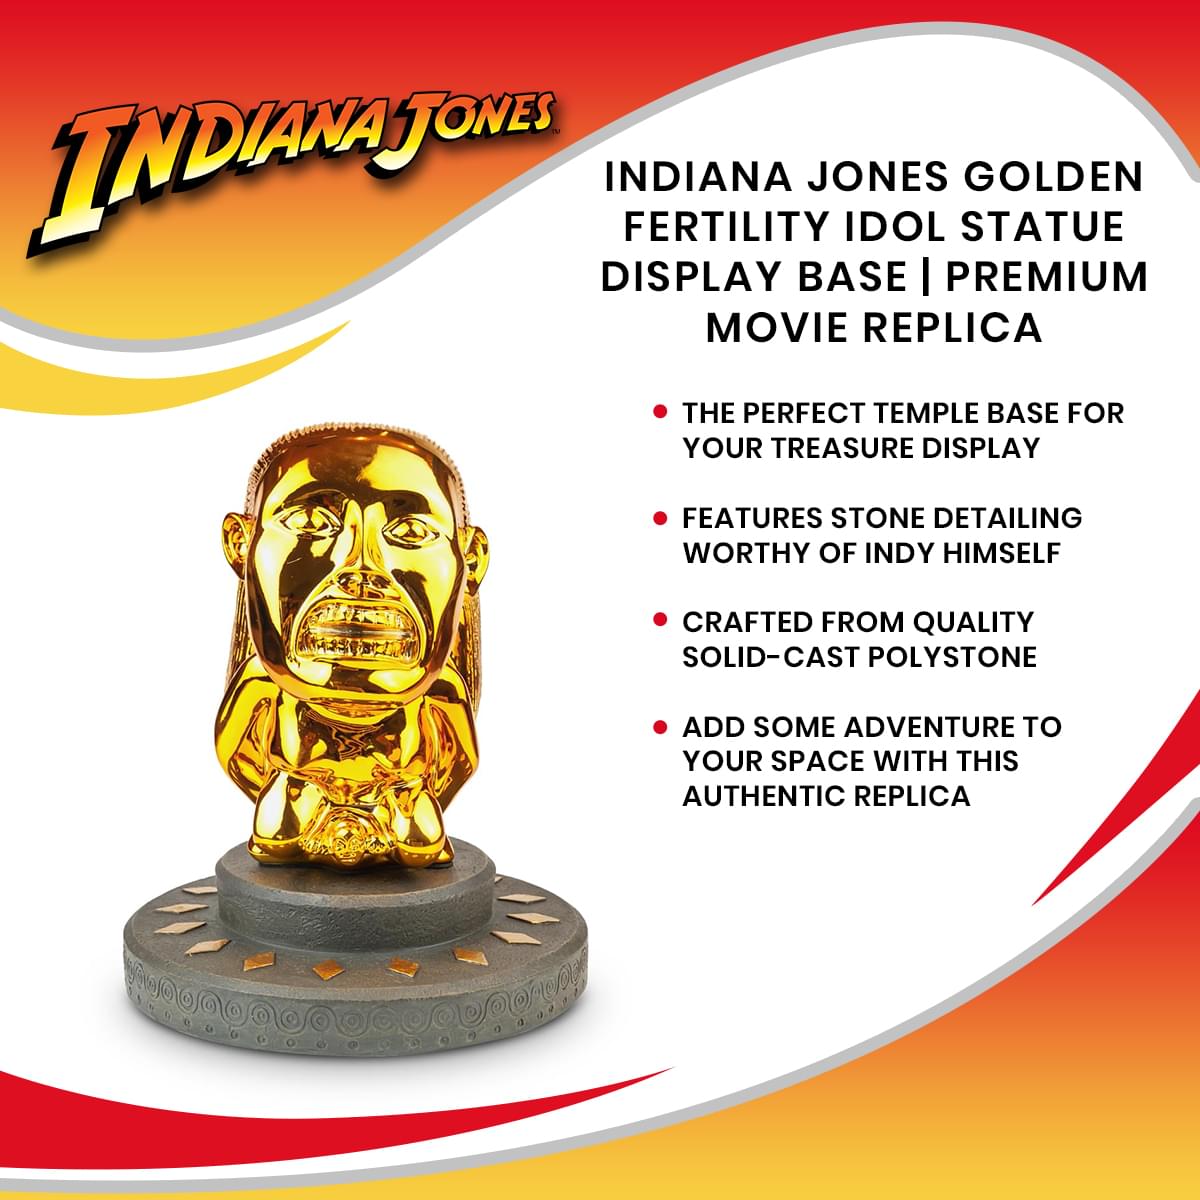 Indiana Jones Fertility Idol Statue Set with Base | Premium Movie Replica